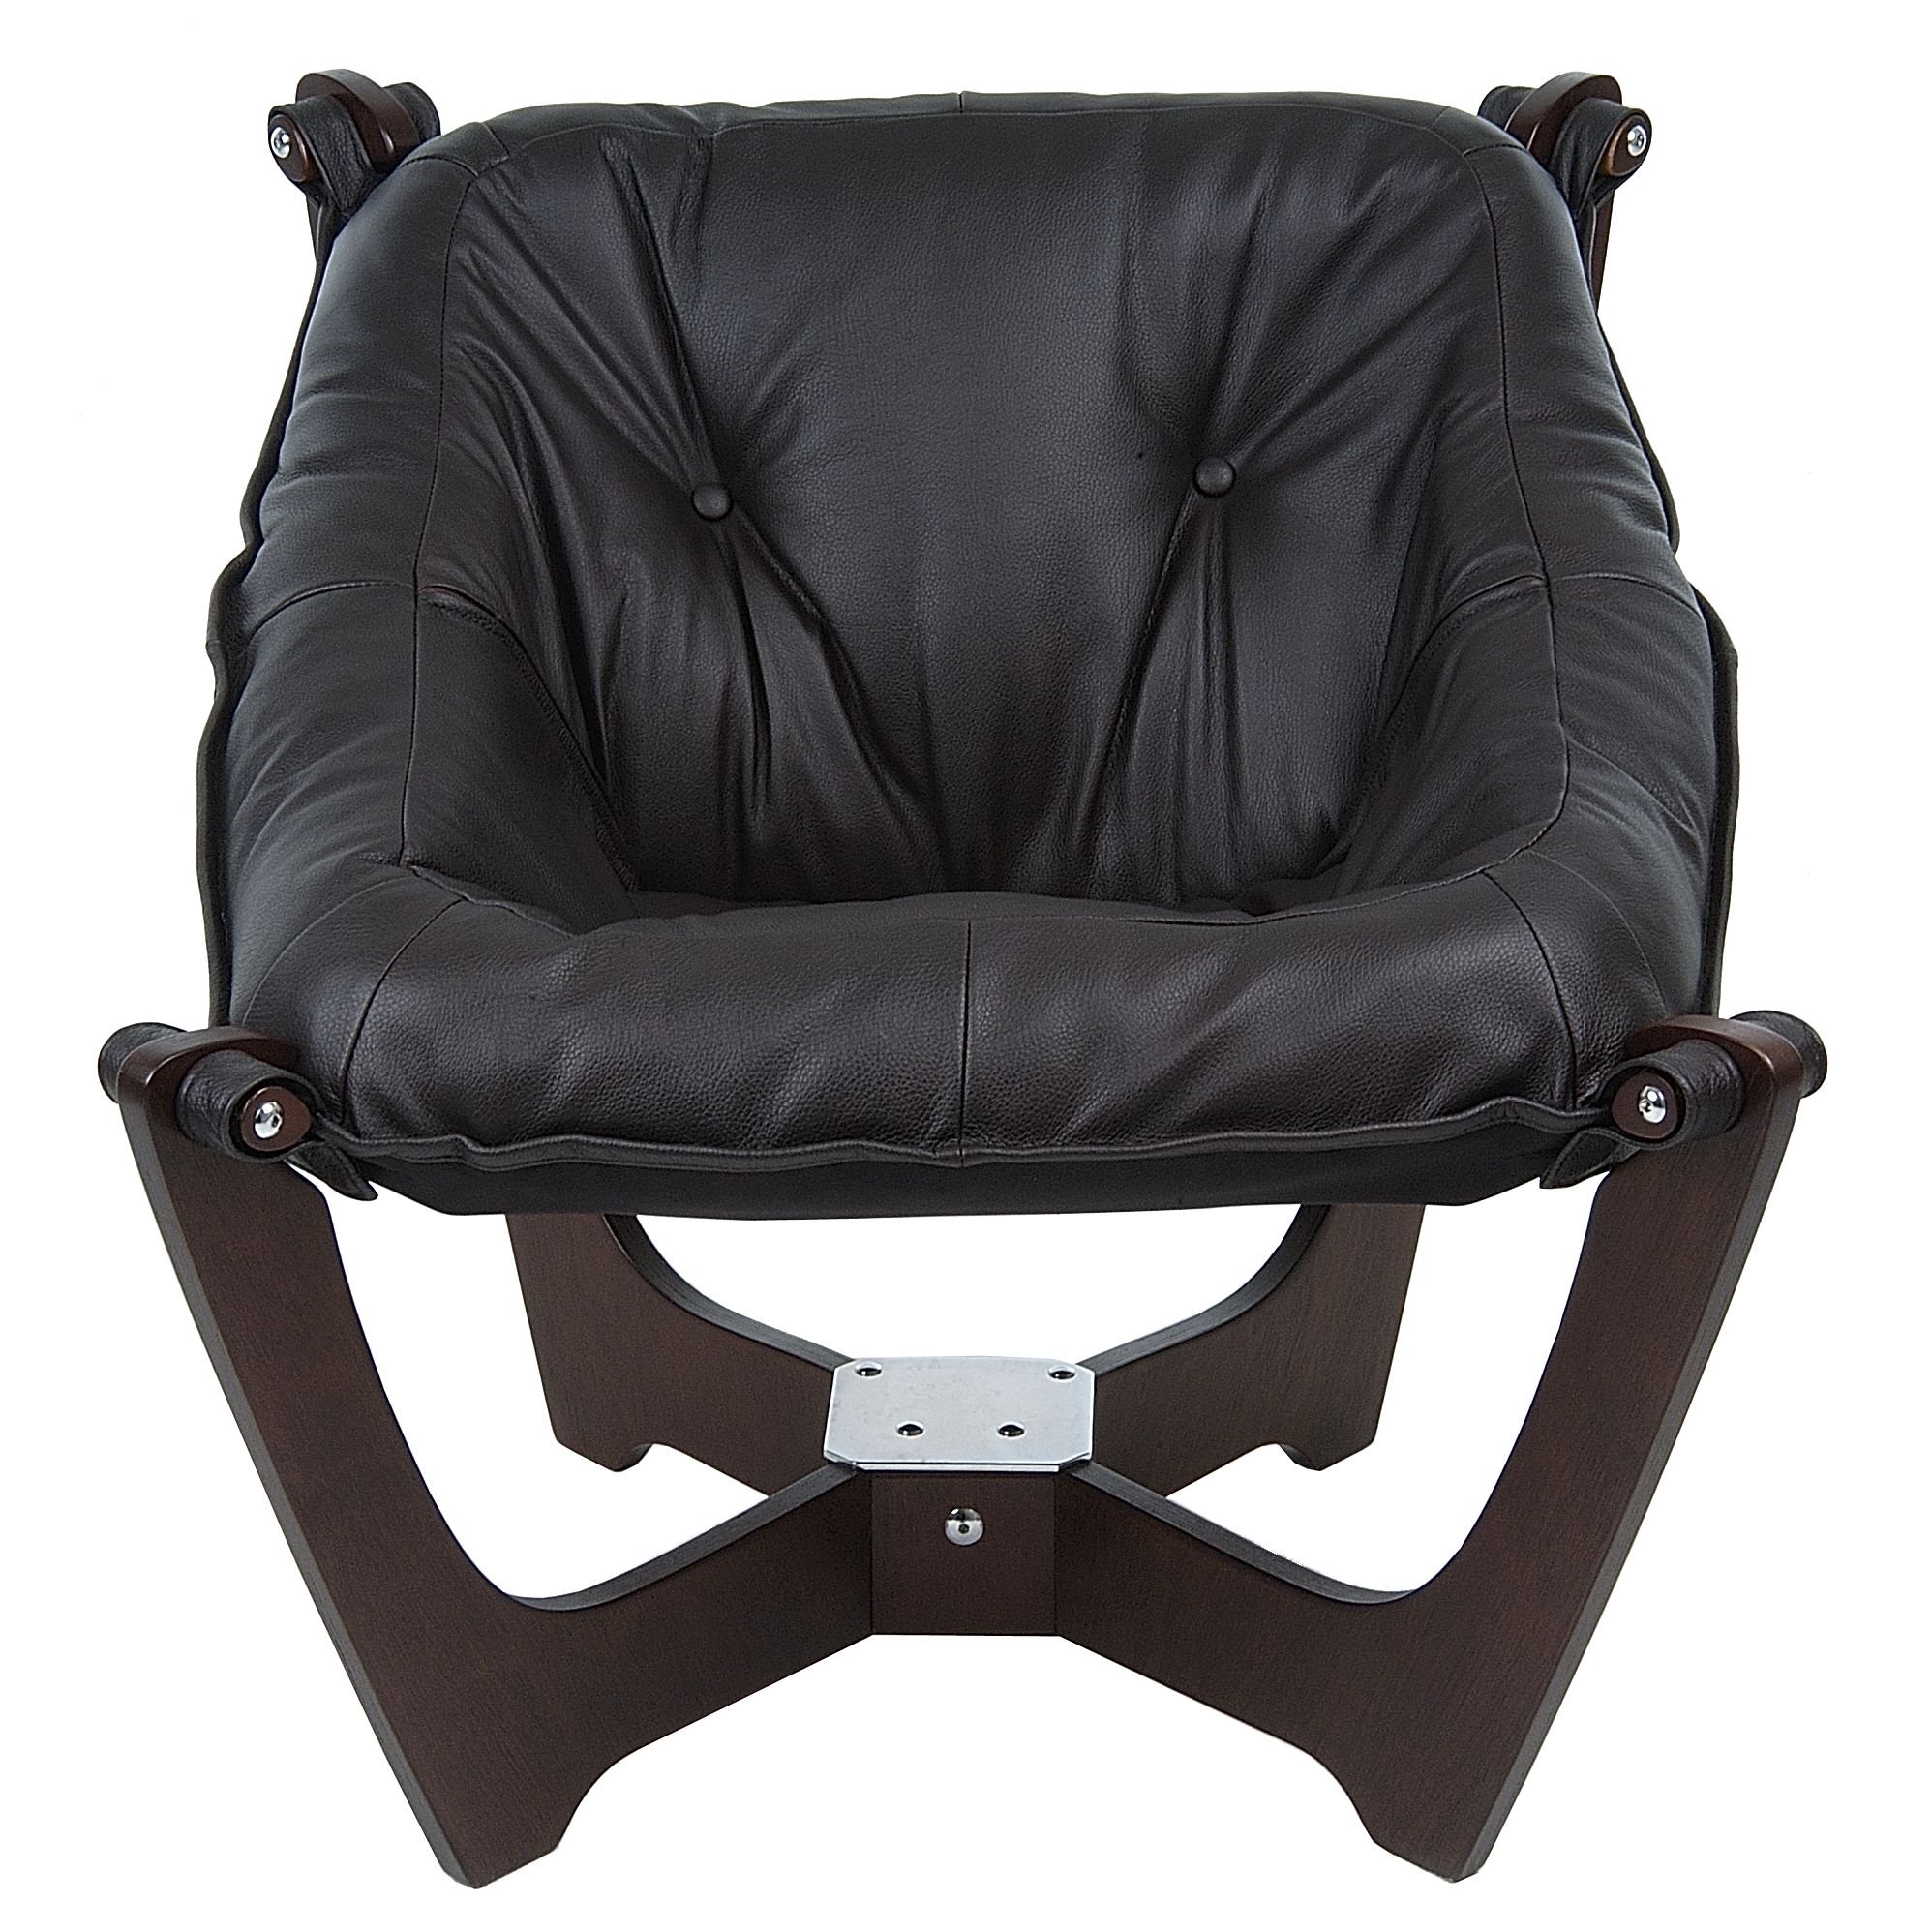 John Lewis Zest Leather Chair, Havana Brown